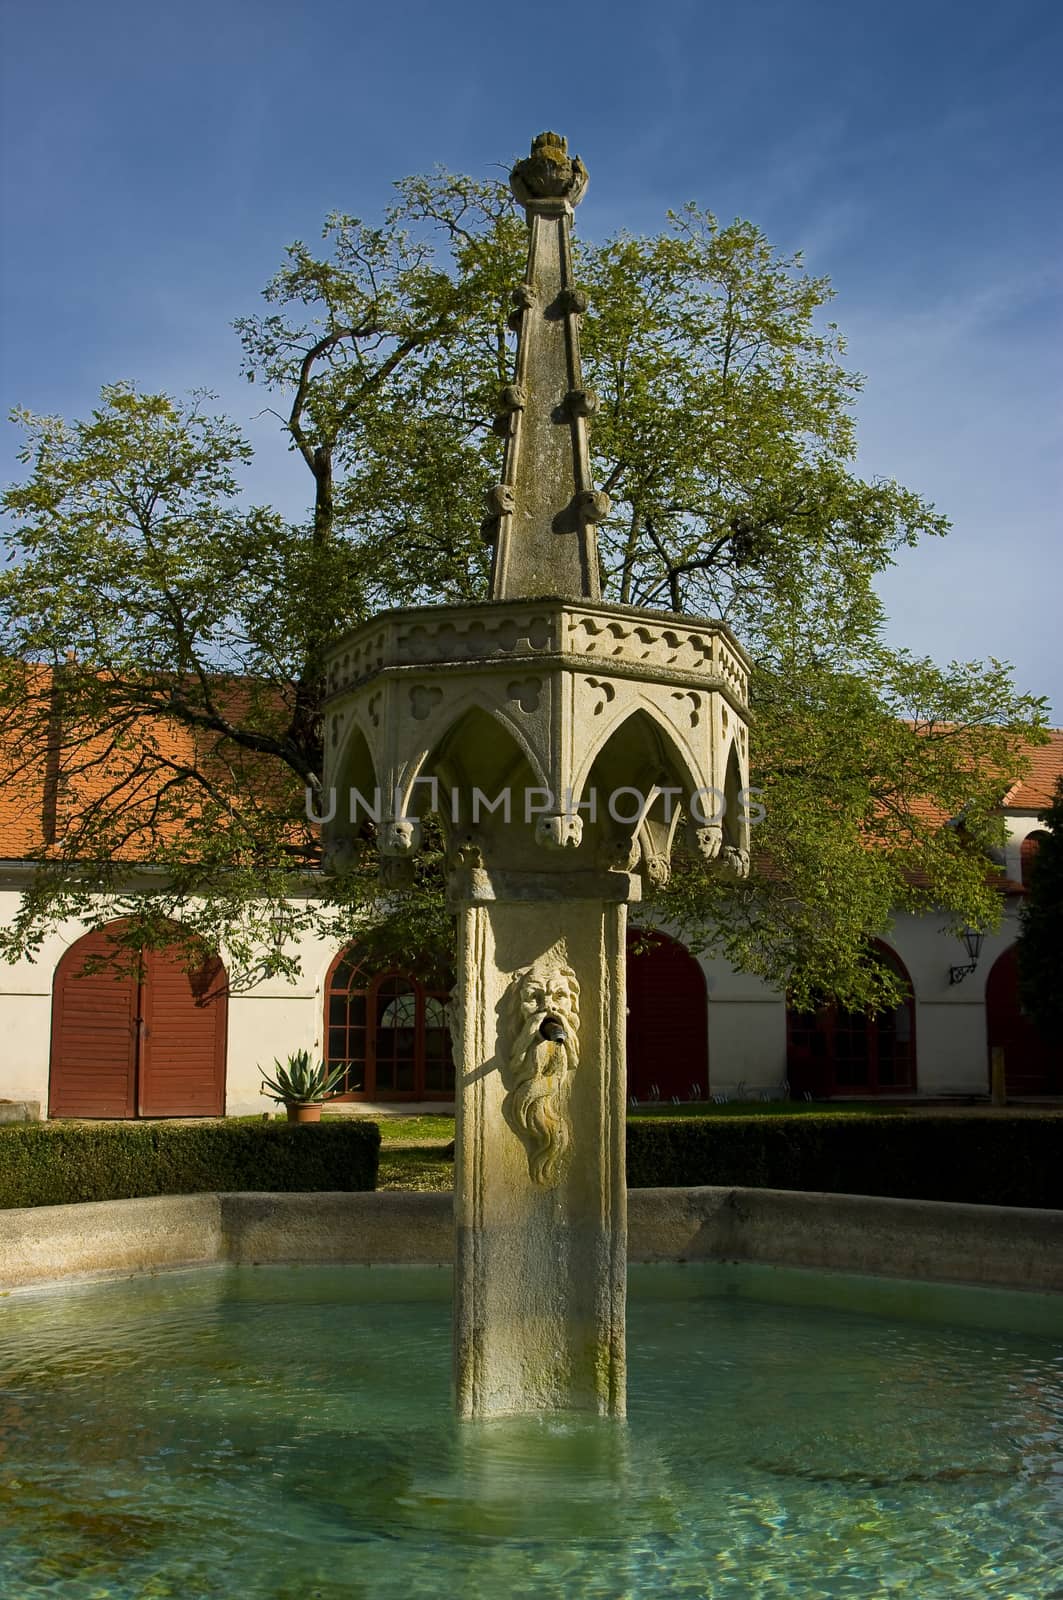 The fountain. by zbynek